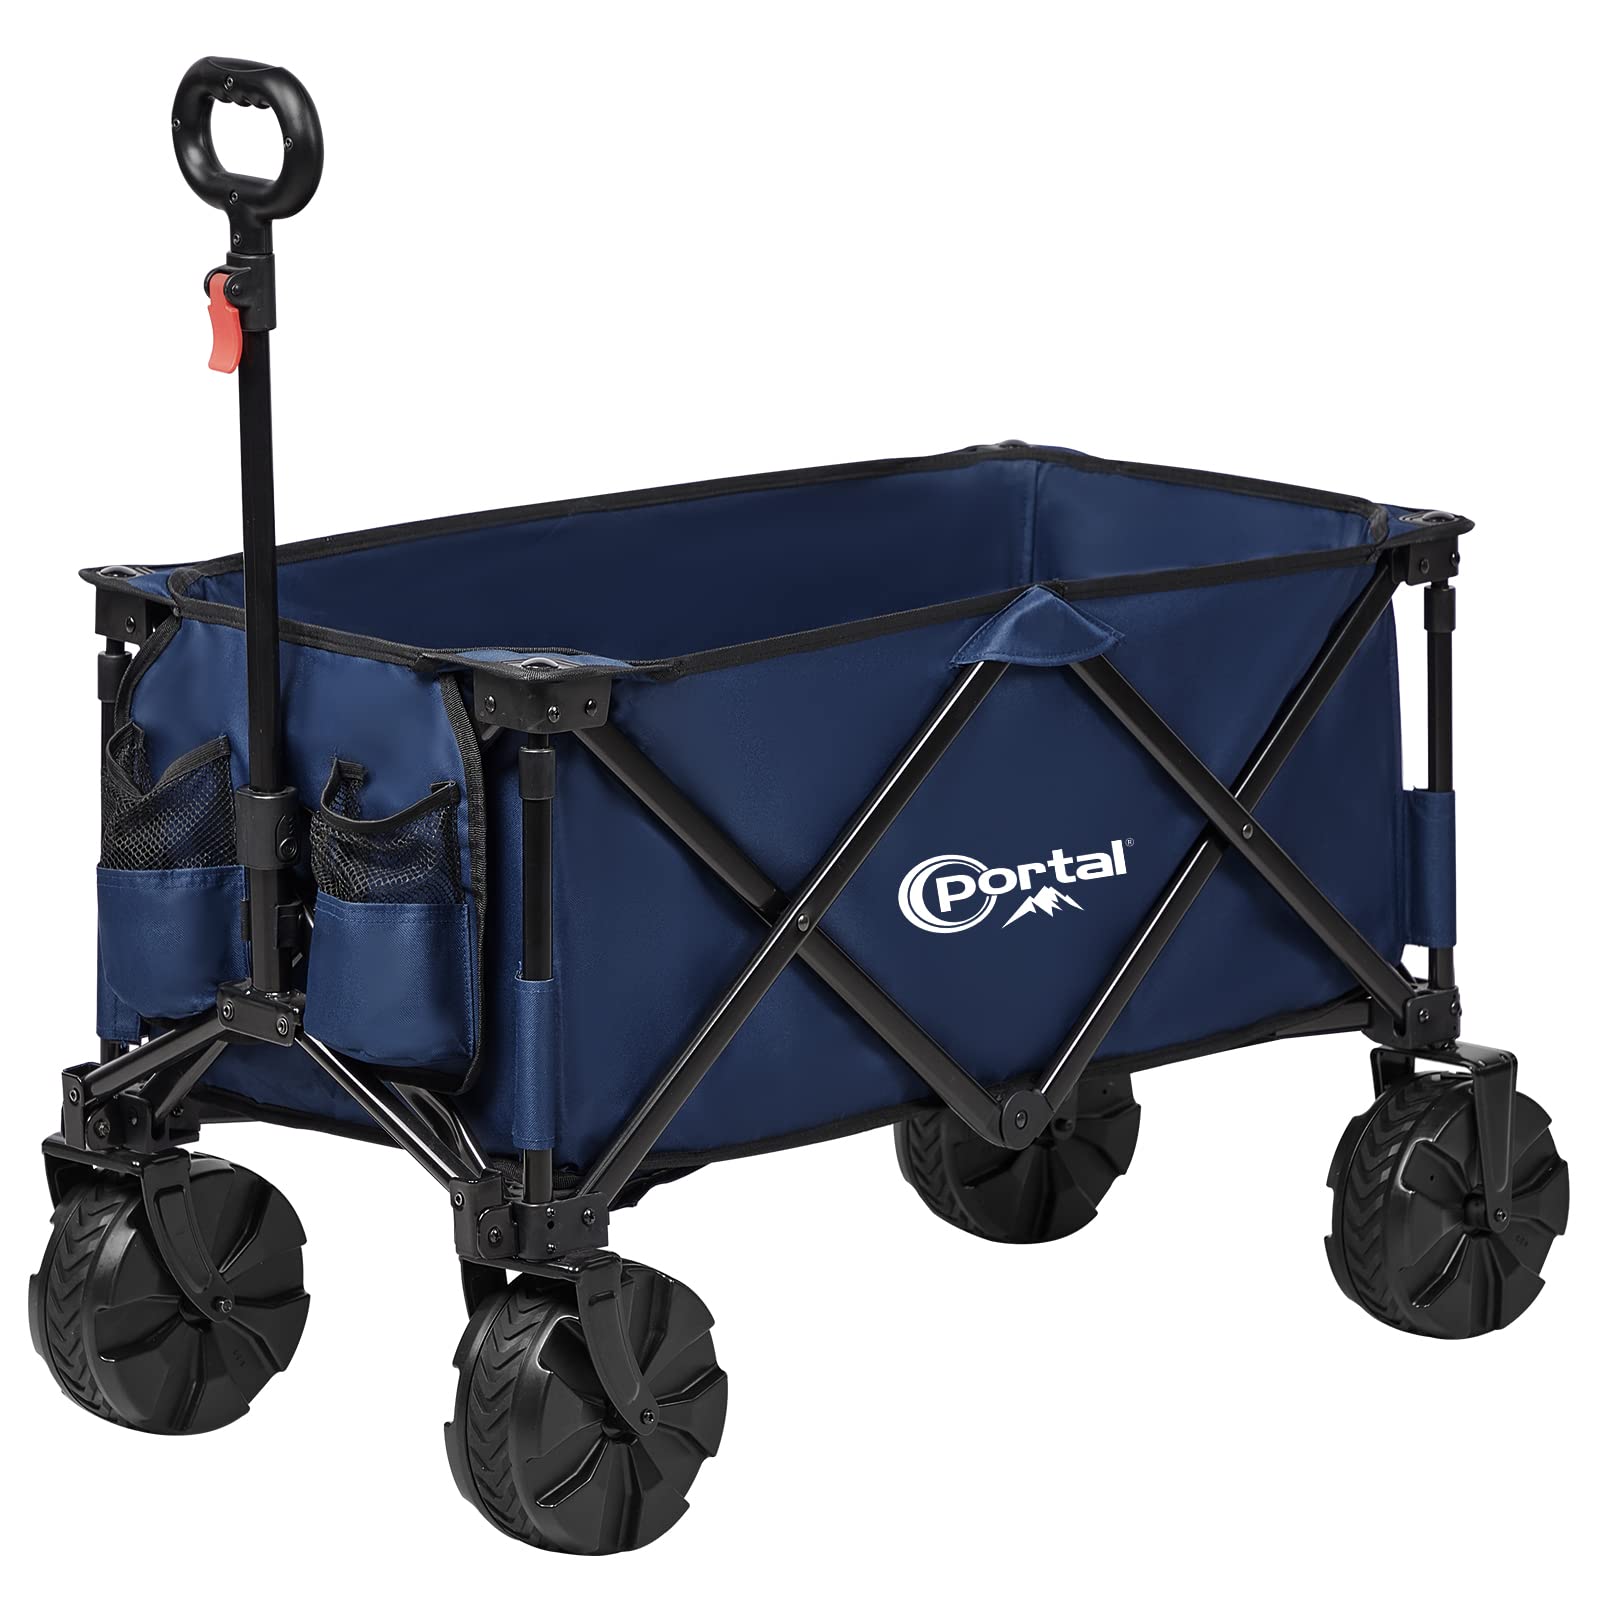 Portal collapsible Folding Utility Wagon, Foldable Wagon carts Heavy Duty, Large capacity Beach Wagon with All Terrain Wheels, O